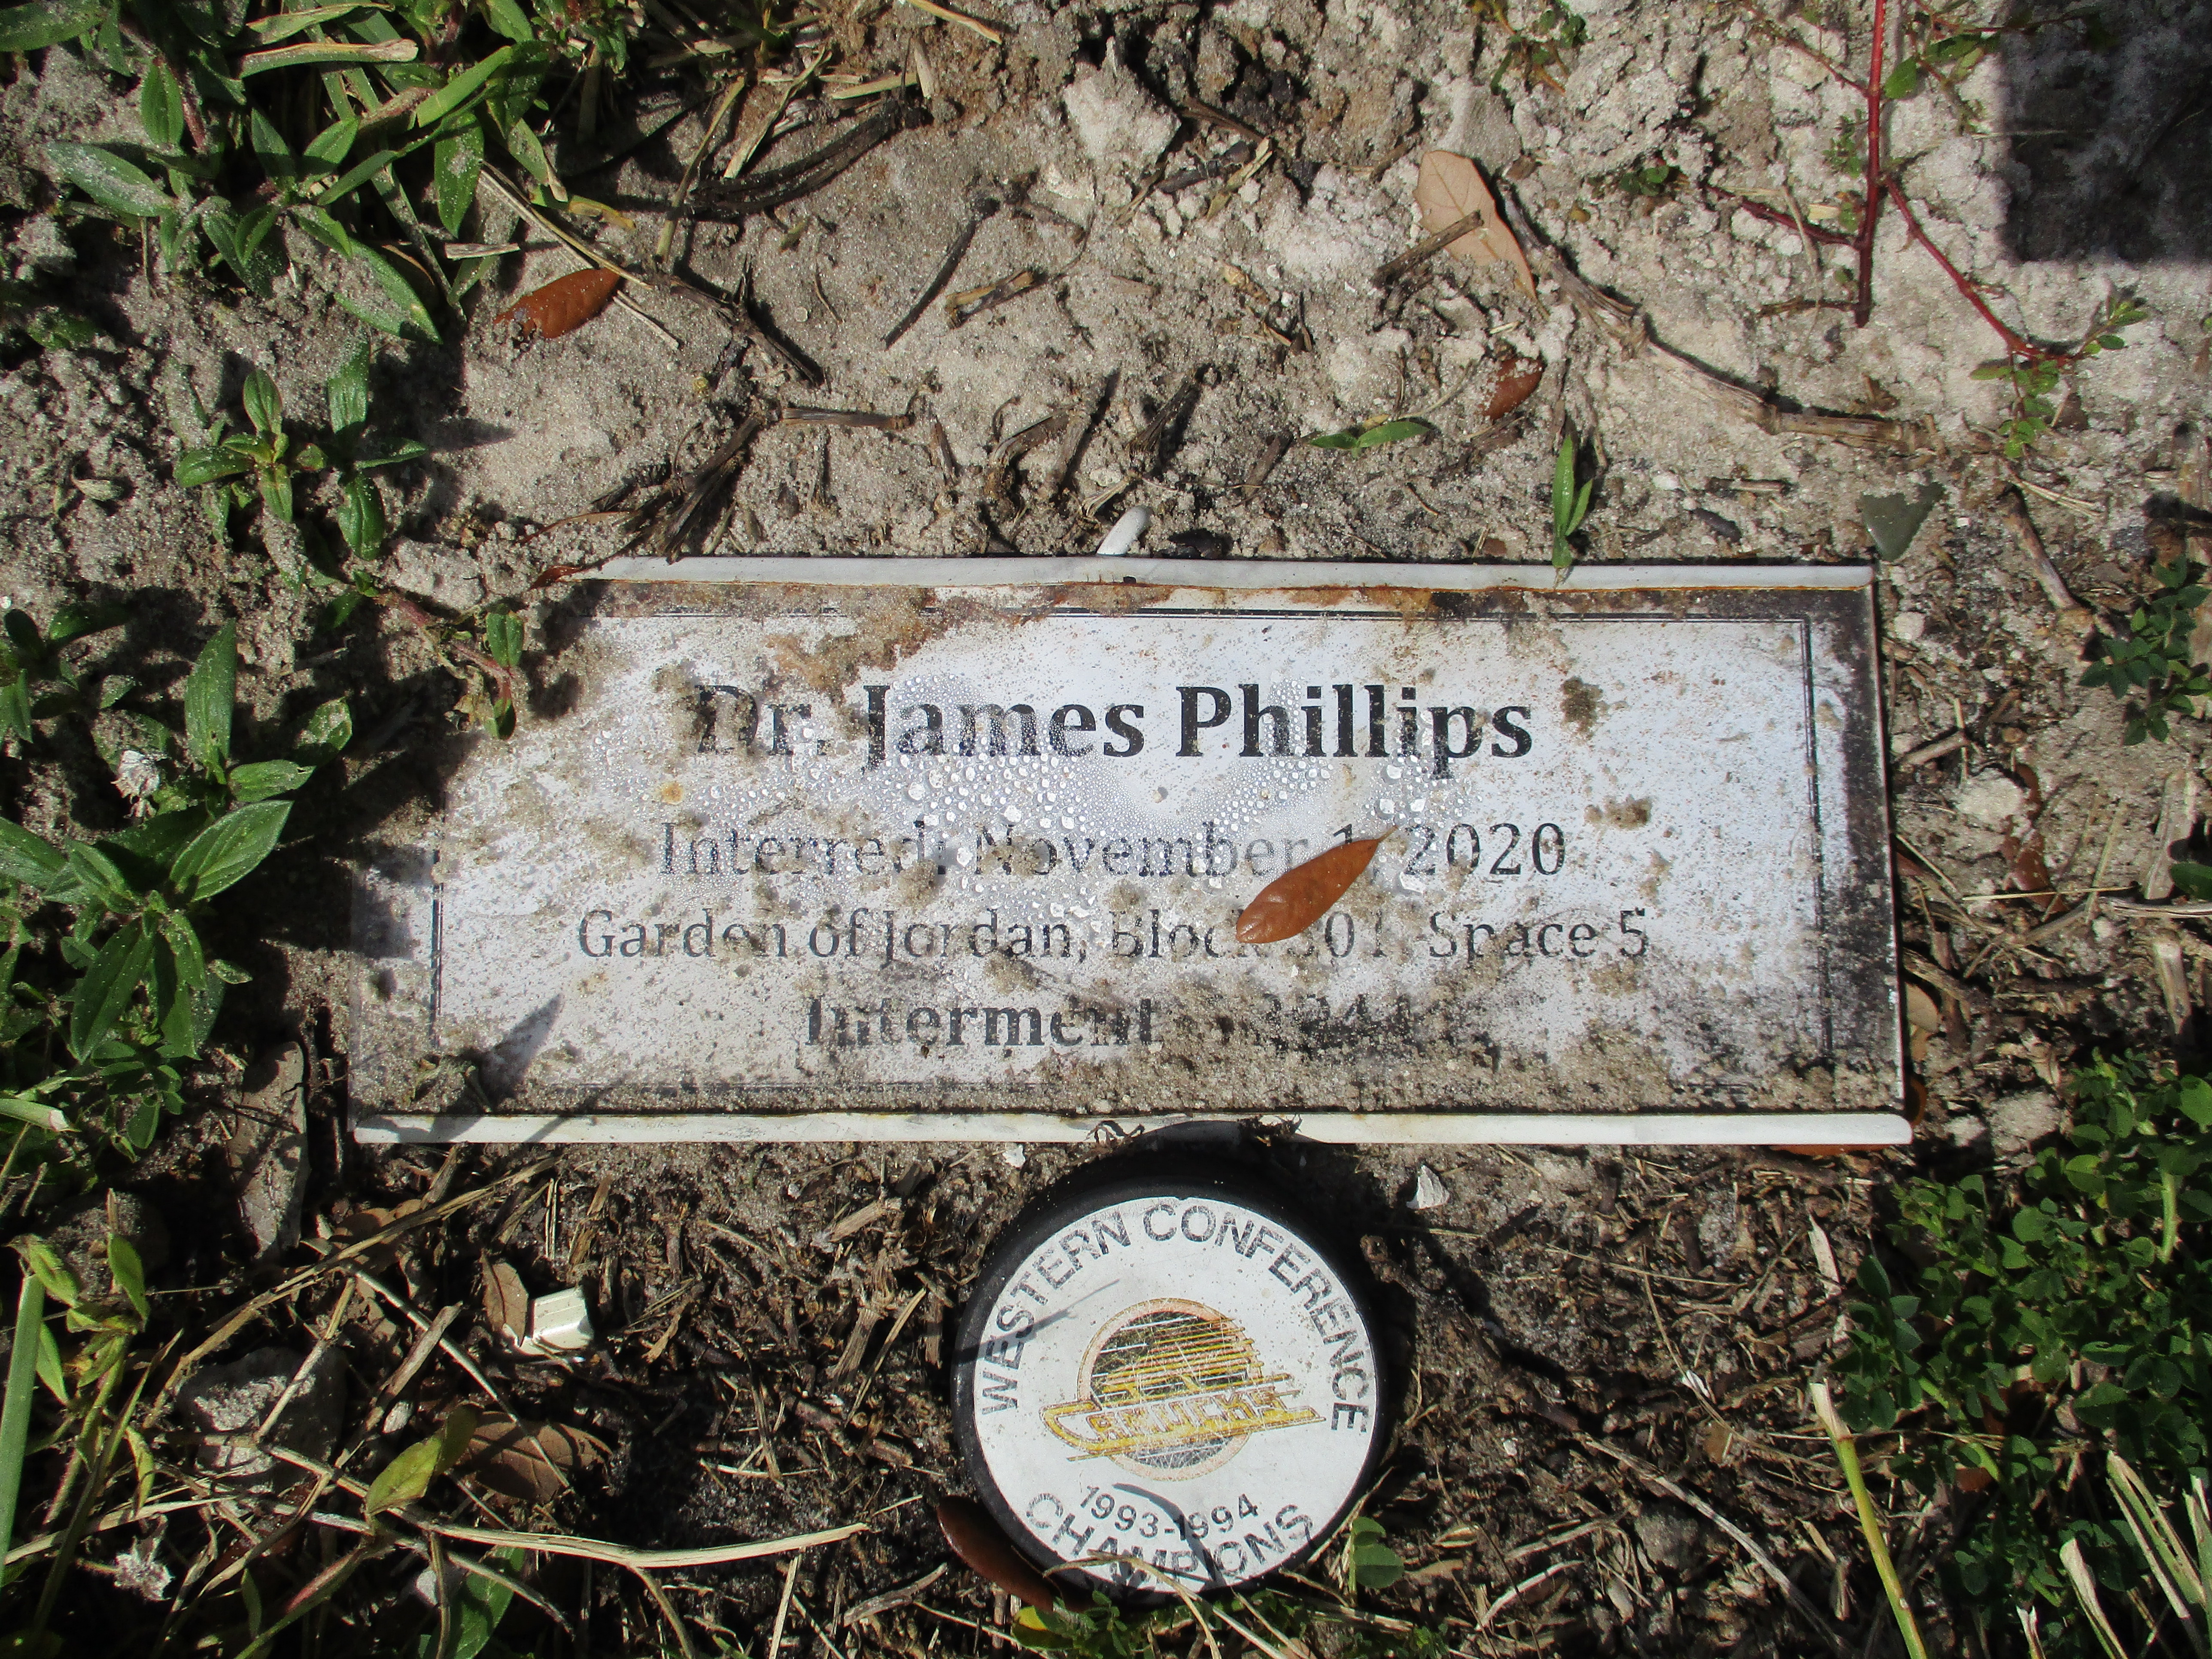 Dr James Phillips